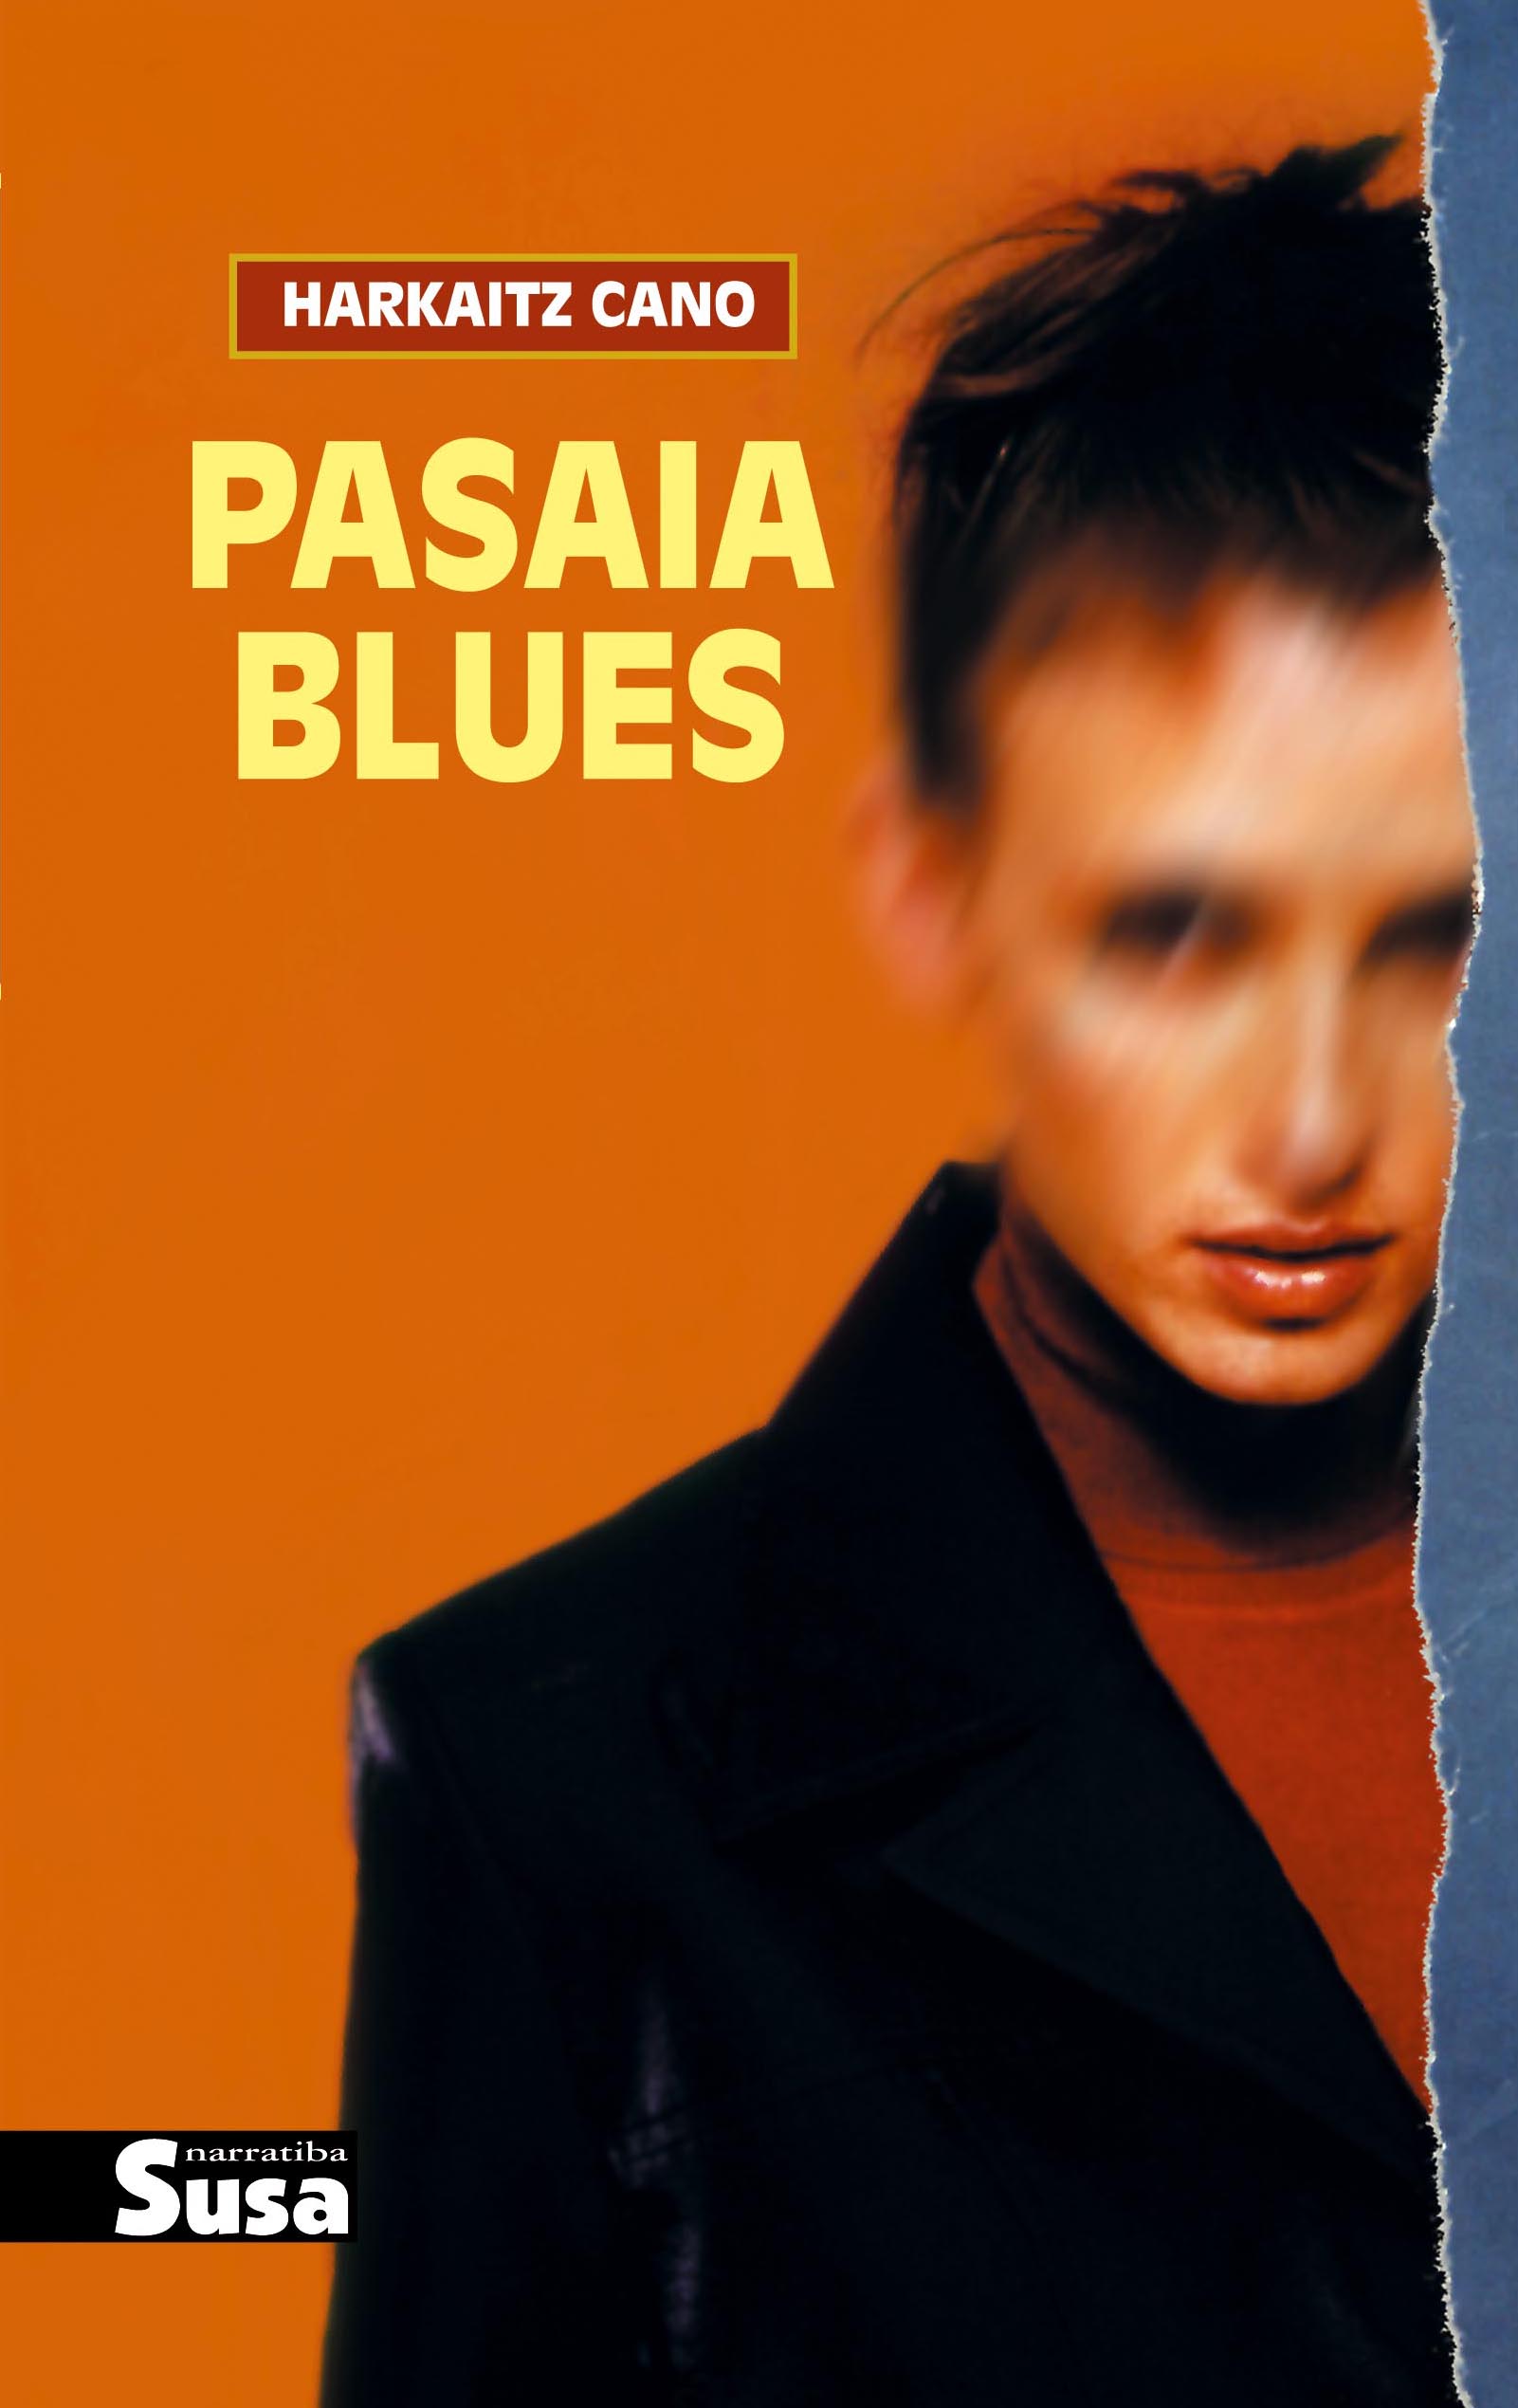 Pasaia blues (Basque language, 1999, Susa)